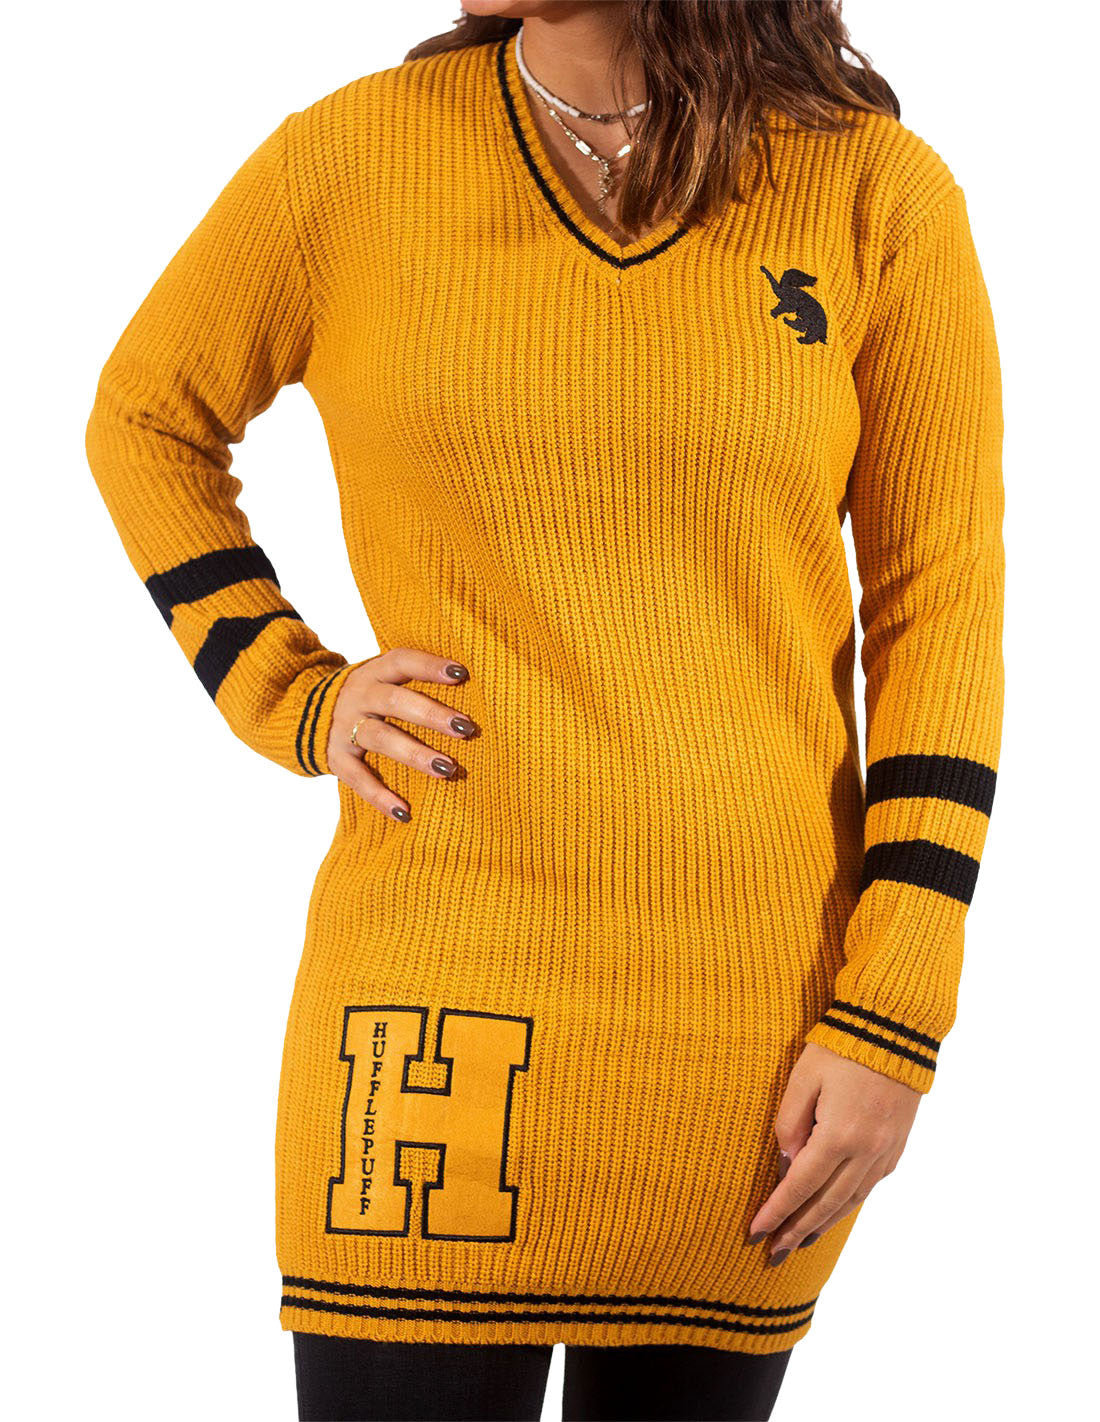 Harry Potter Sweater Dress - Hufflepuff